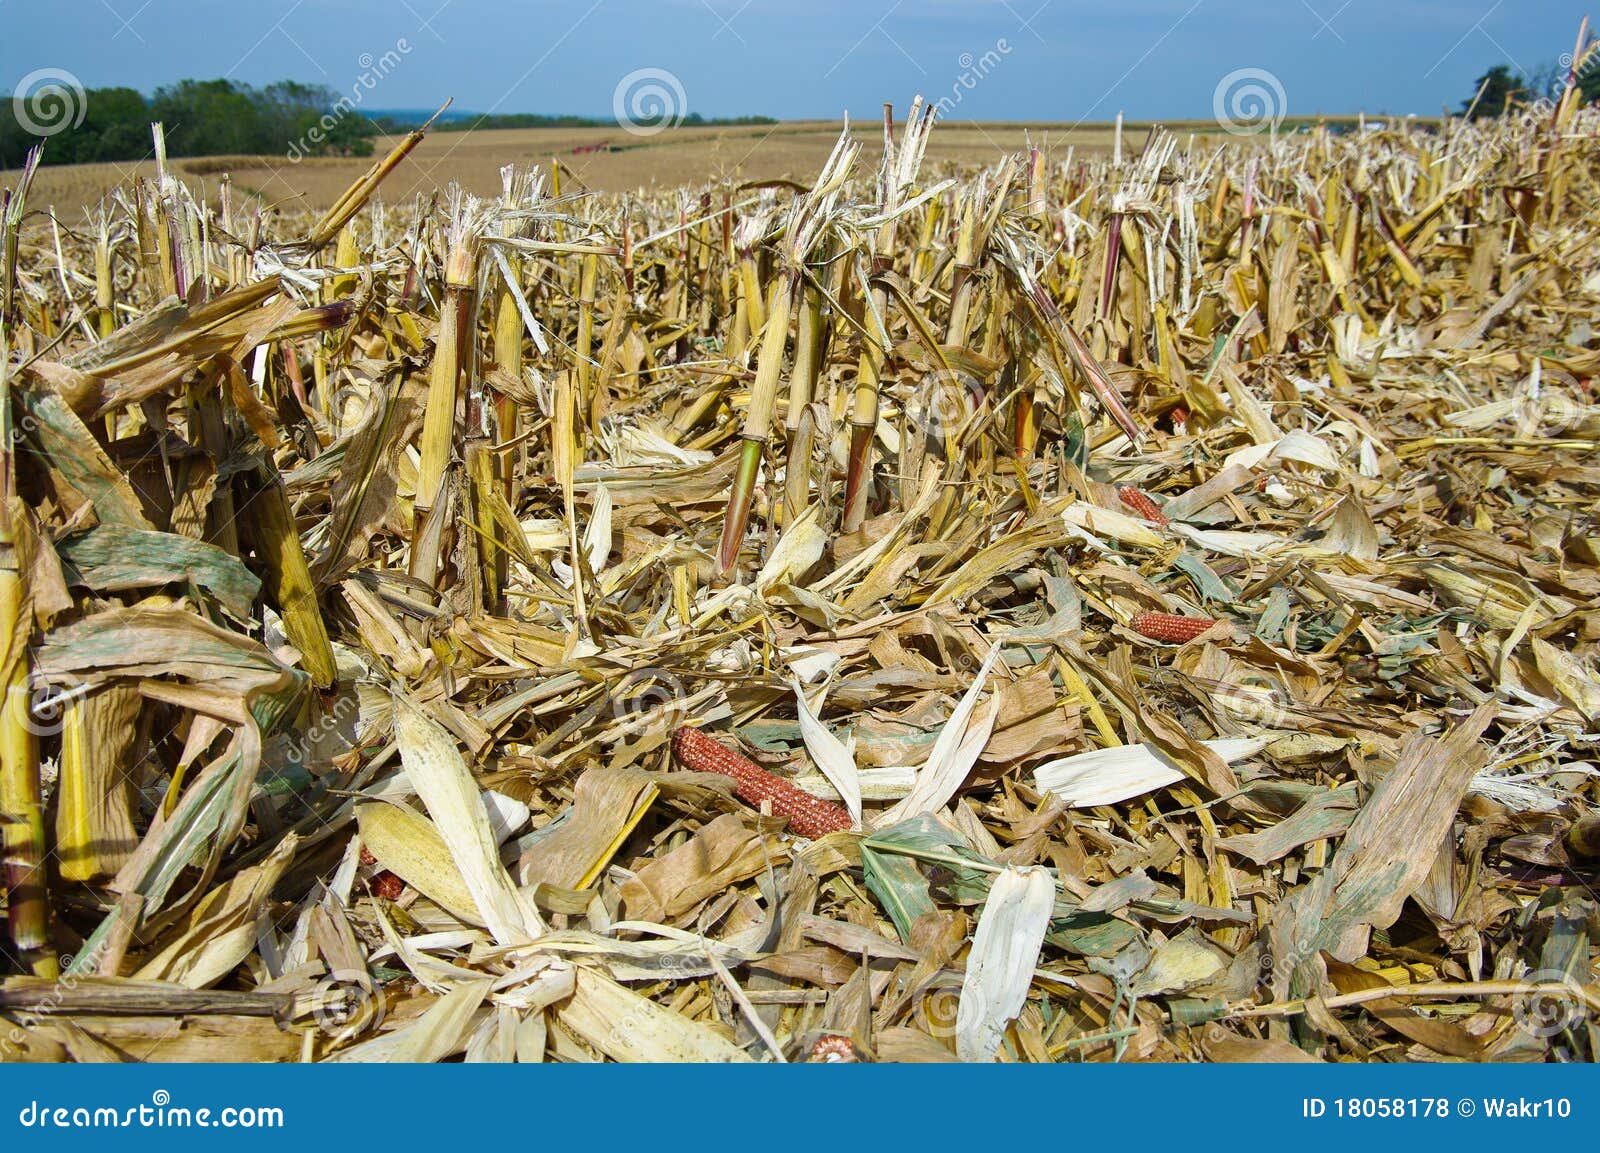 corn fields after harvest